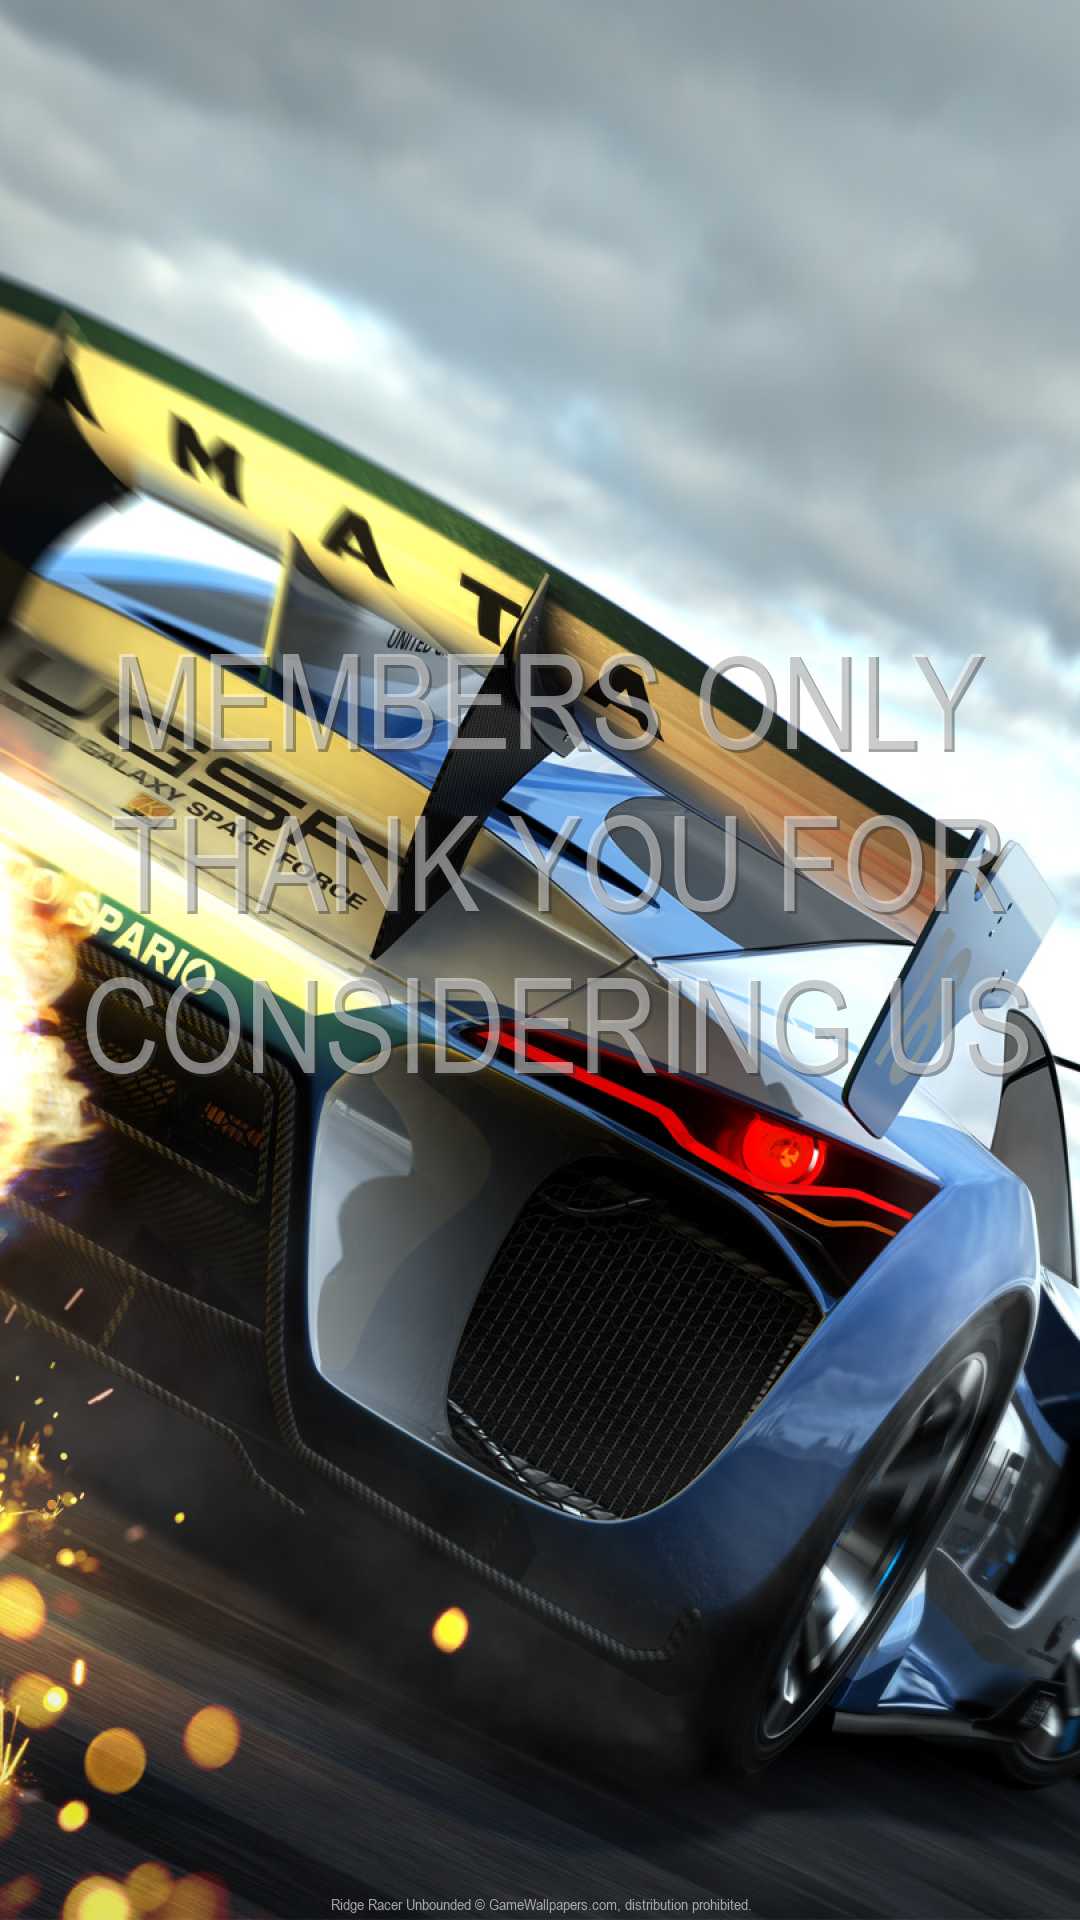 Ridge Racer Unbounded 1080p Vertical Mobile wallpaper or background 03